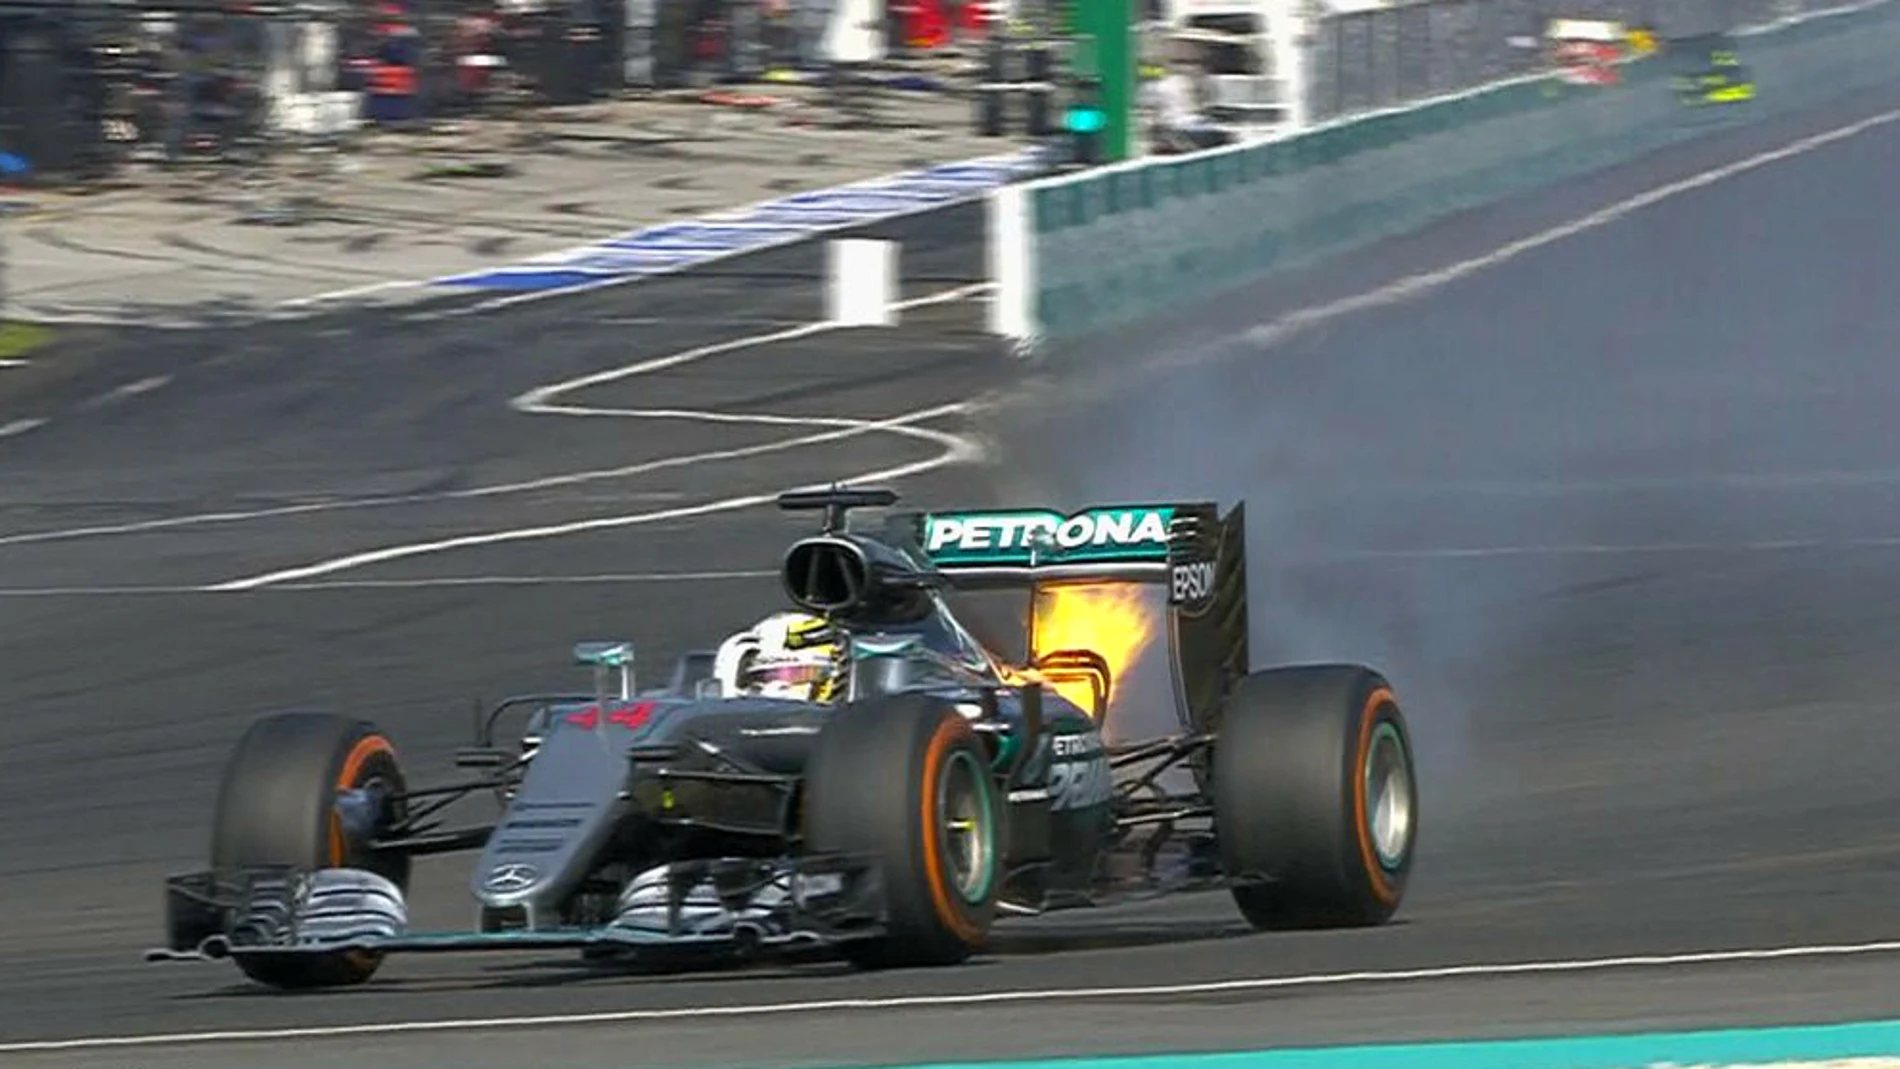 El Mercedes de Hamilton echa fuego tras romper motor